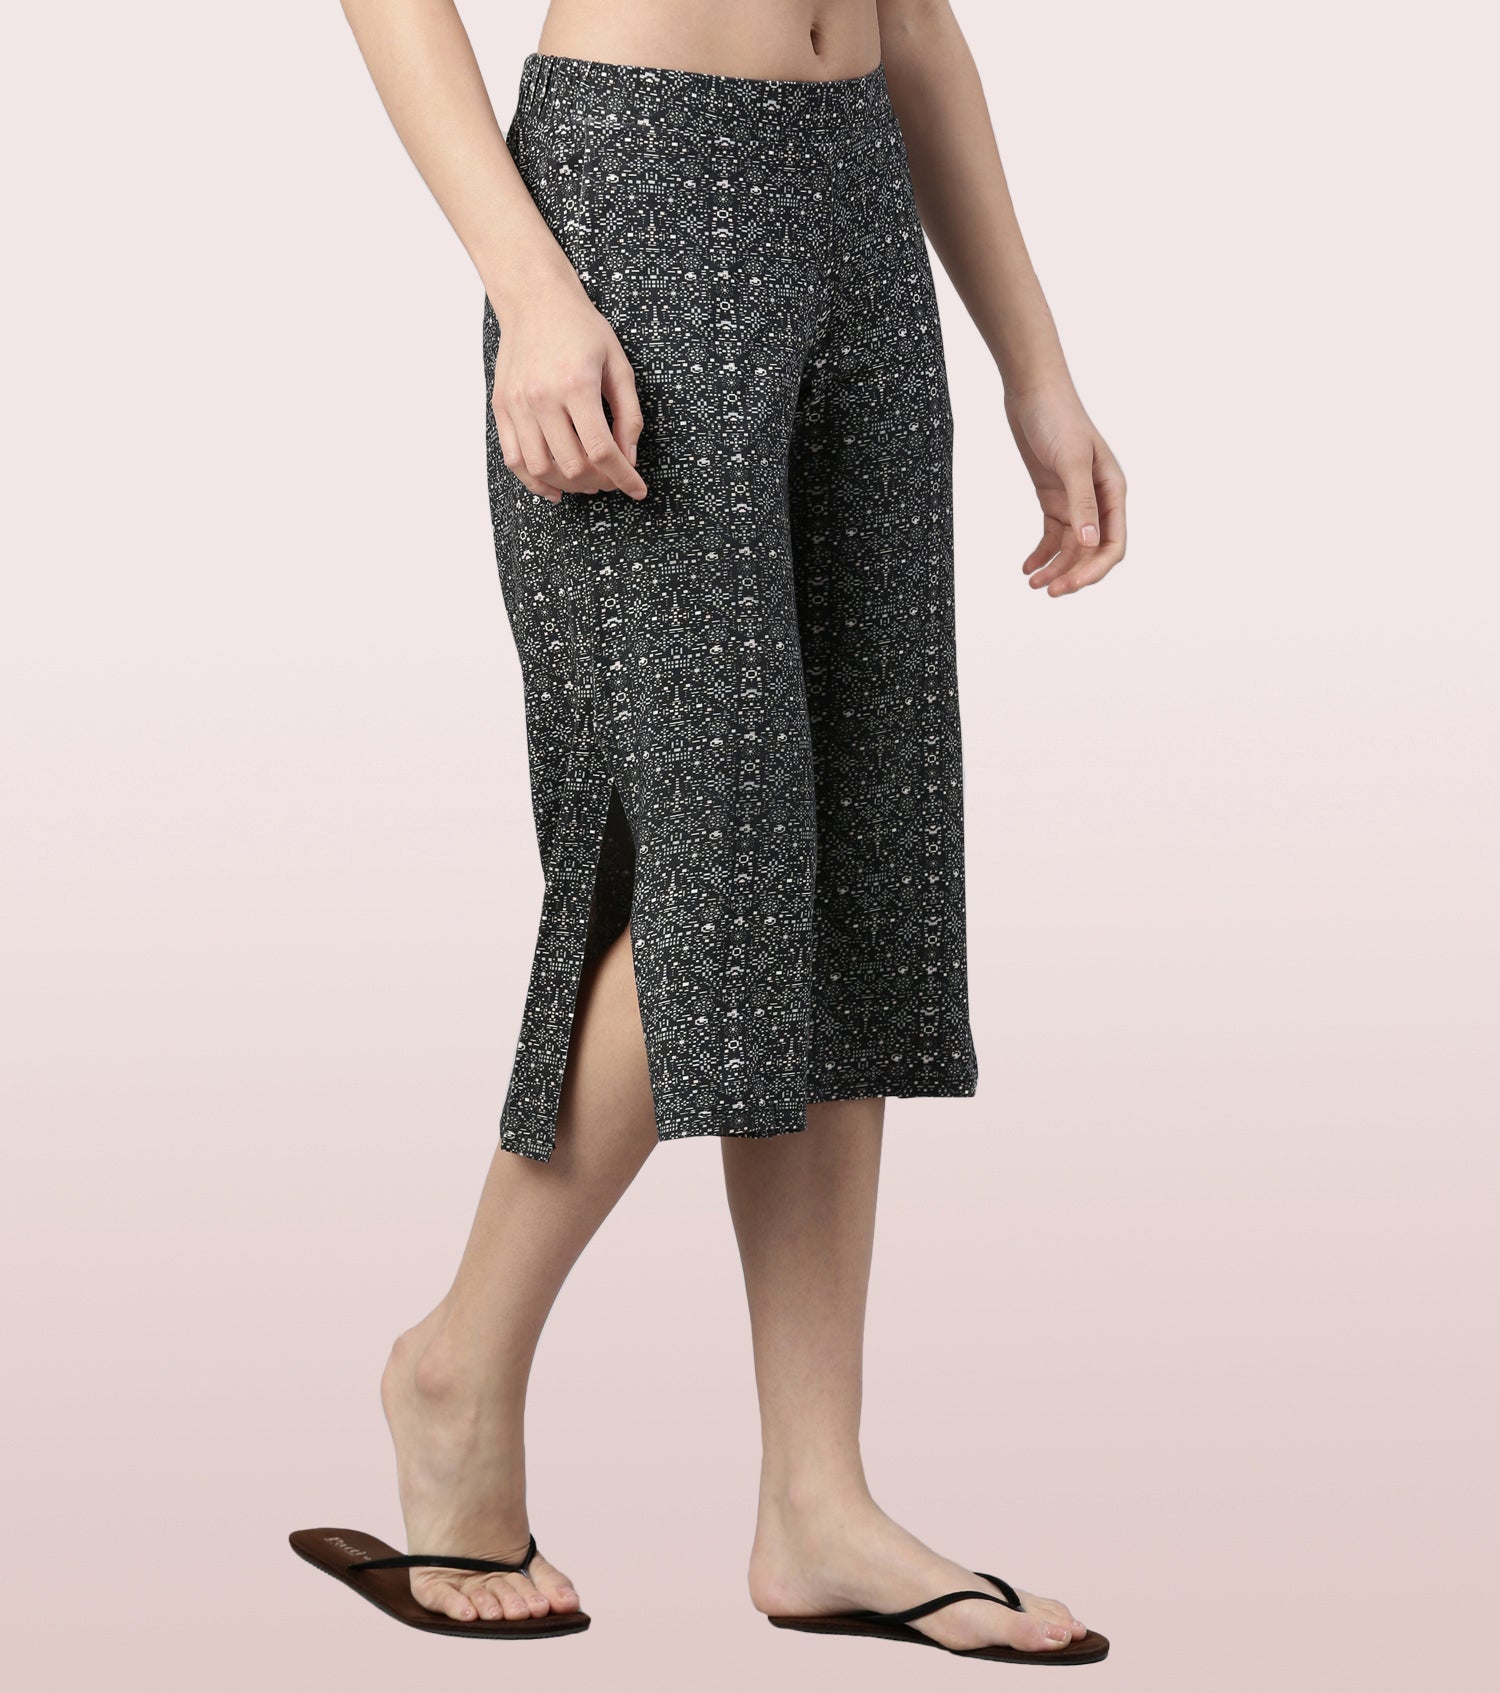 Enamor Culotte Pants For Women | Crop Length Culottes With Smart Side Slits | Black Pixie Aop